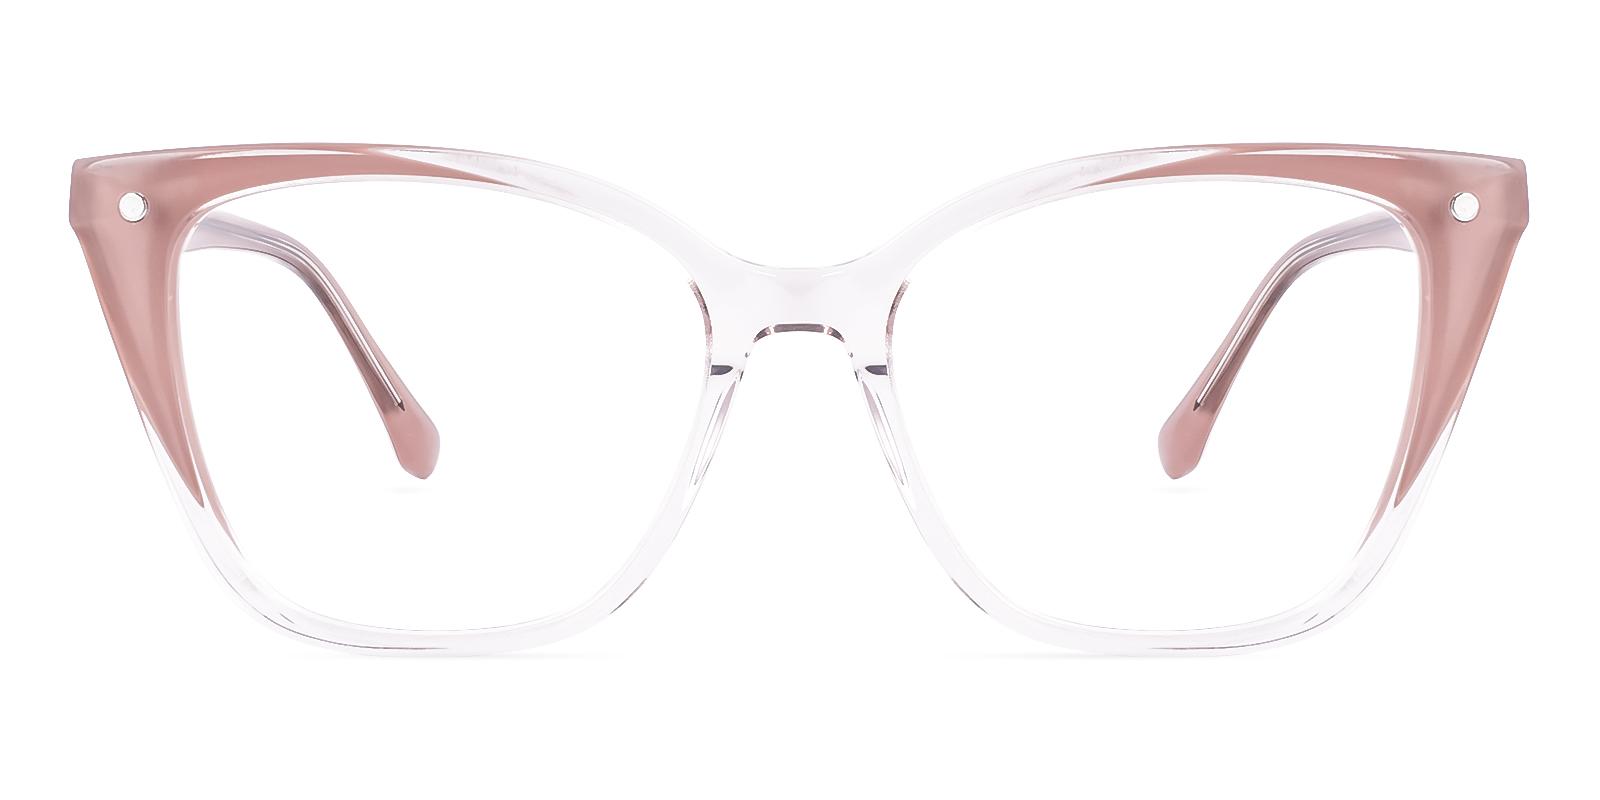 Iquan Pink Acetate Eyeglasses , SpringHinges , UniversalBridgeFit , clip-on Frames from ABBE Glasses